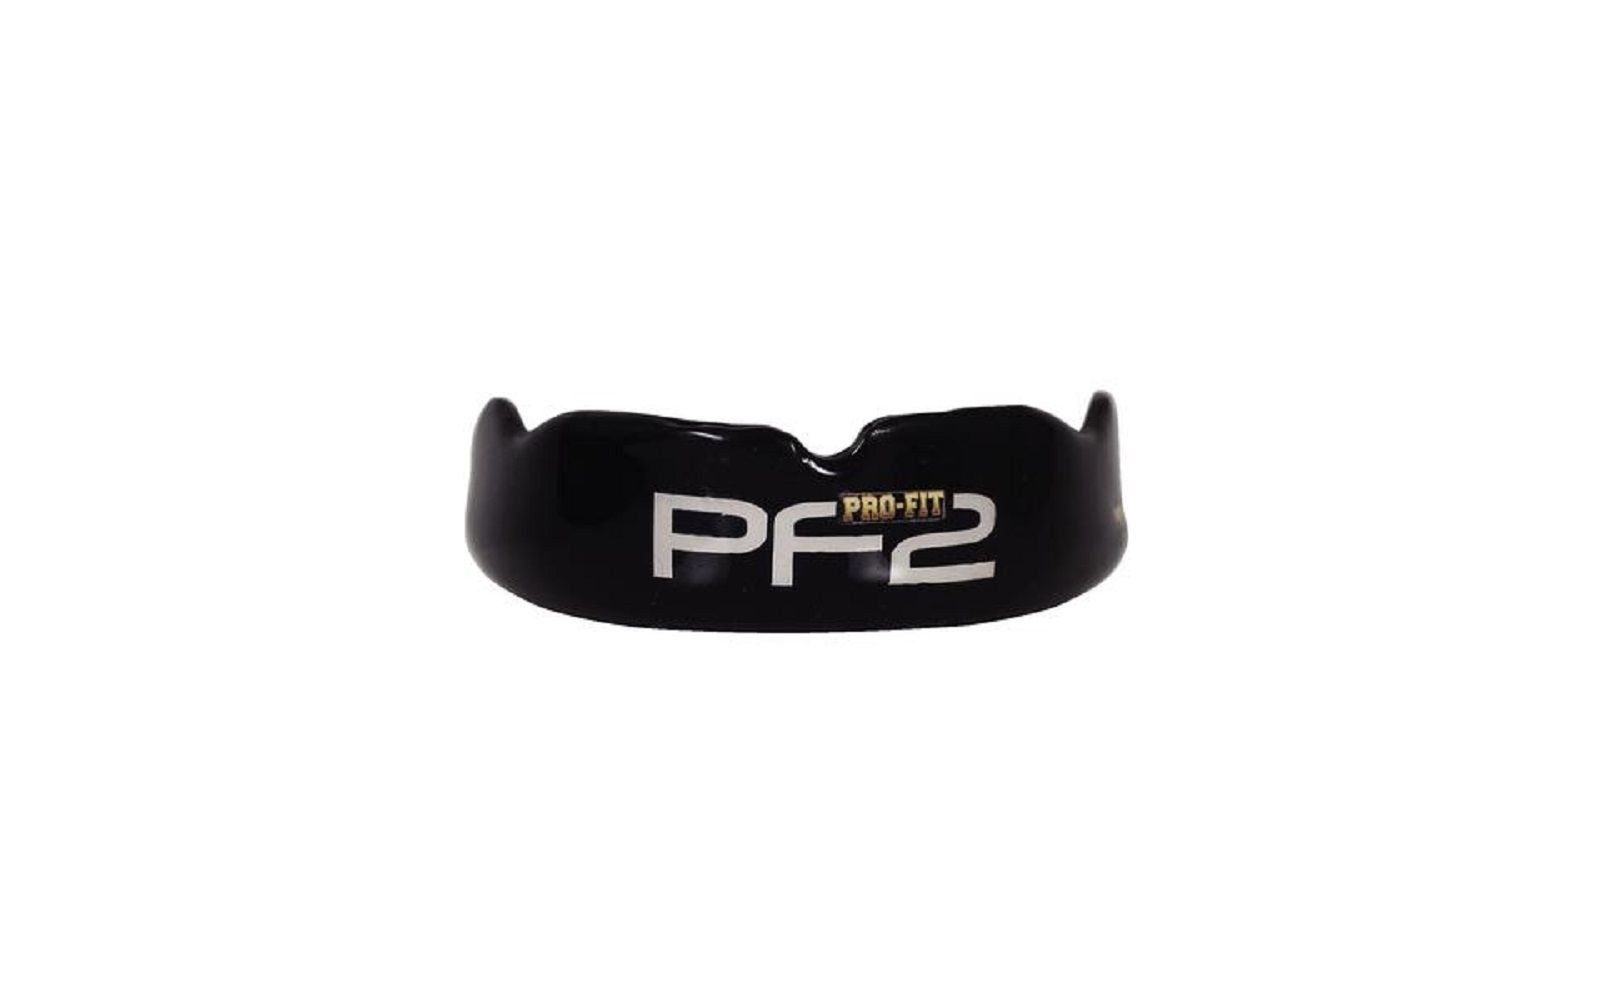 Proform pf2™ mouthguard - keystone industries